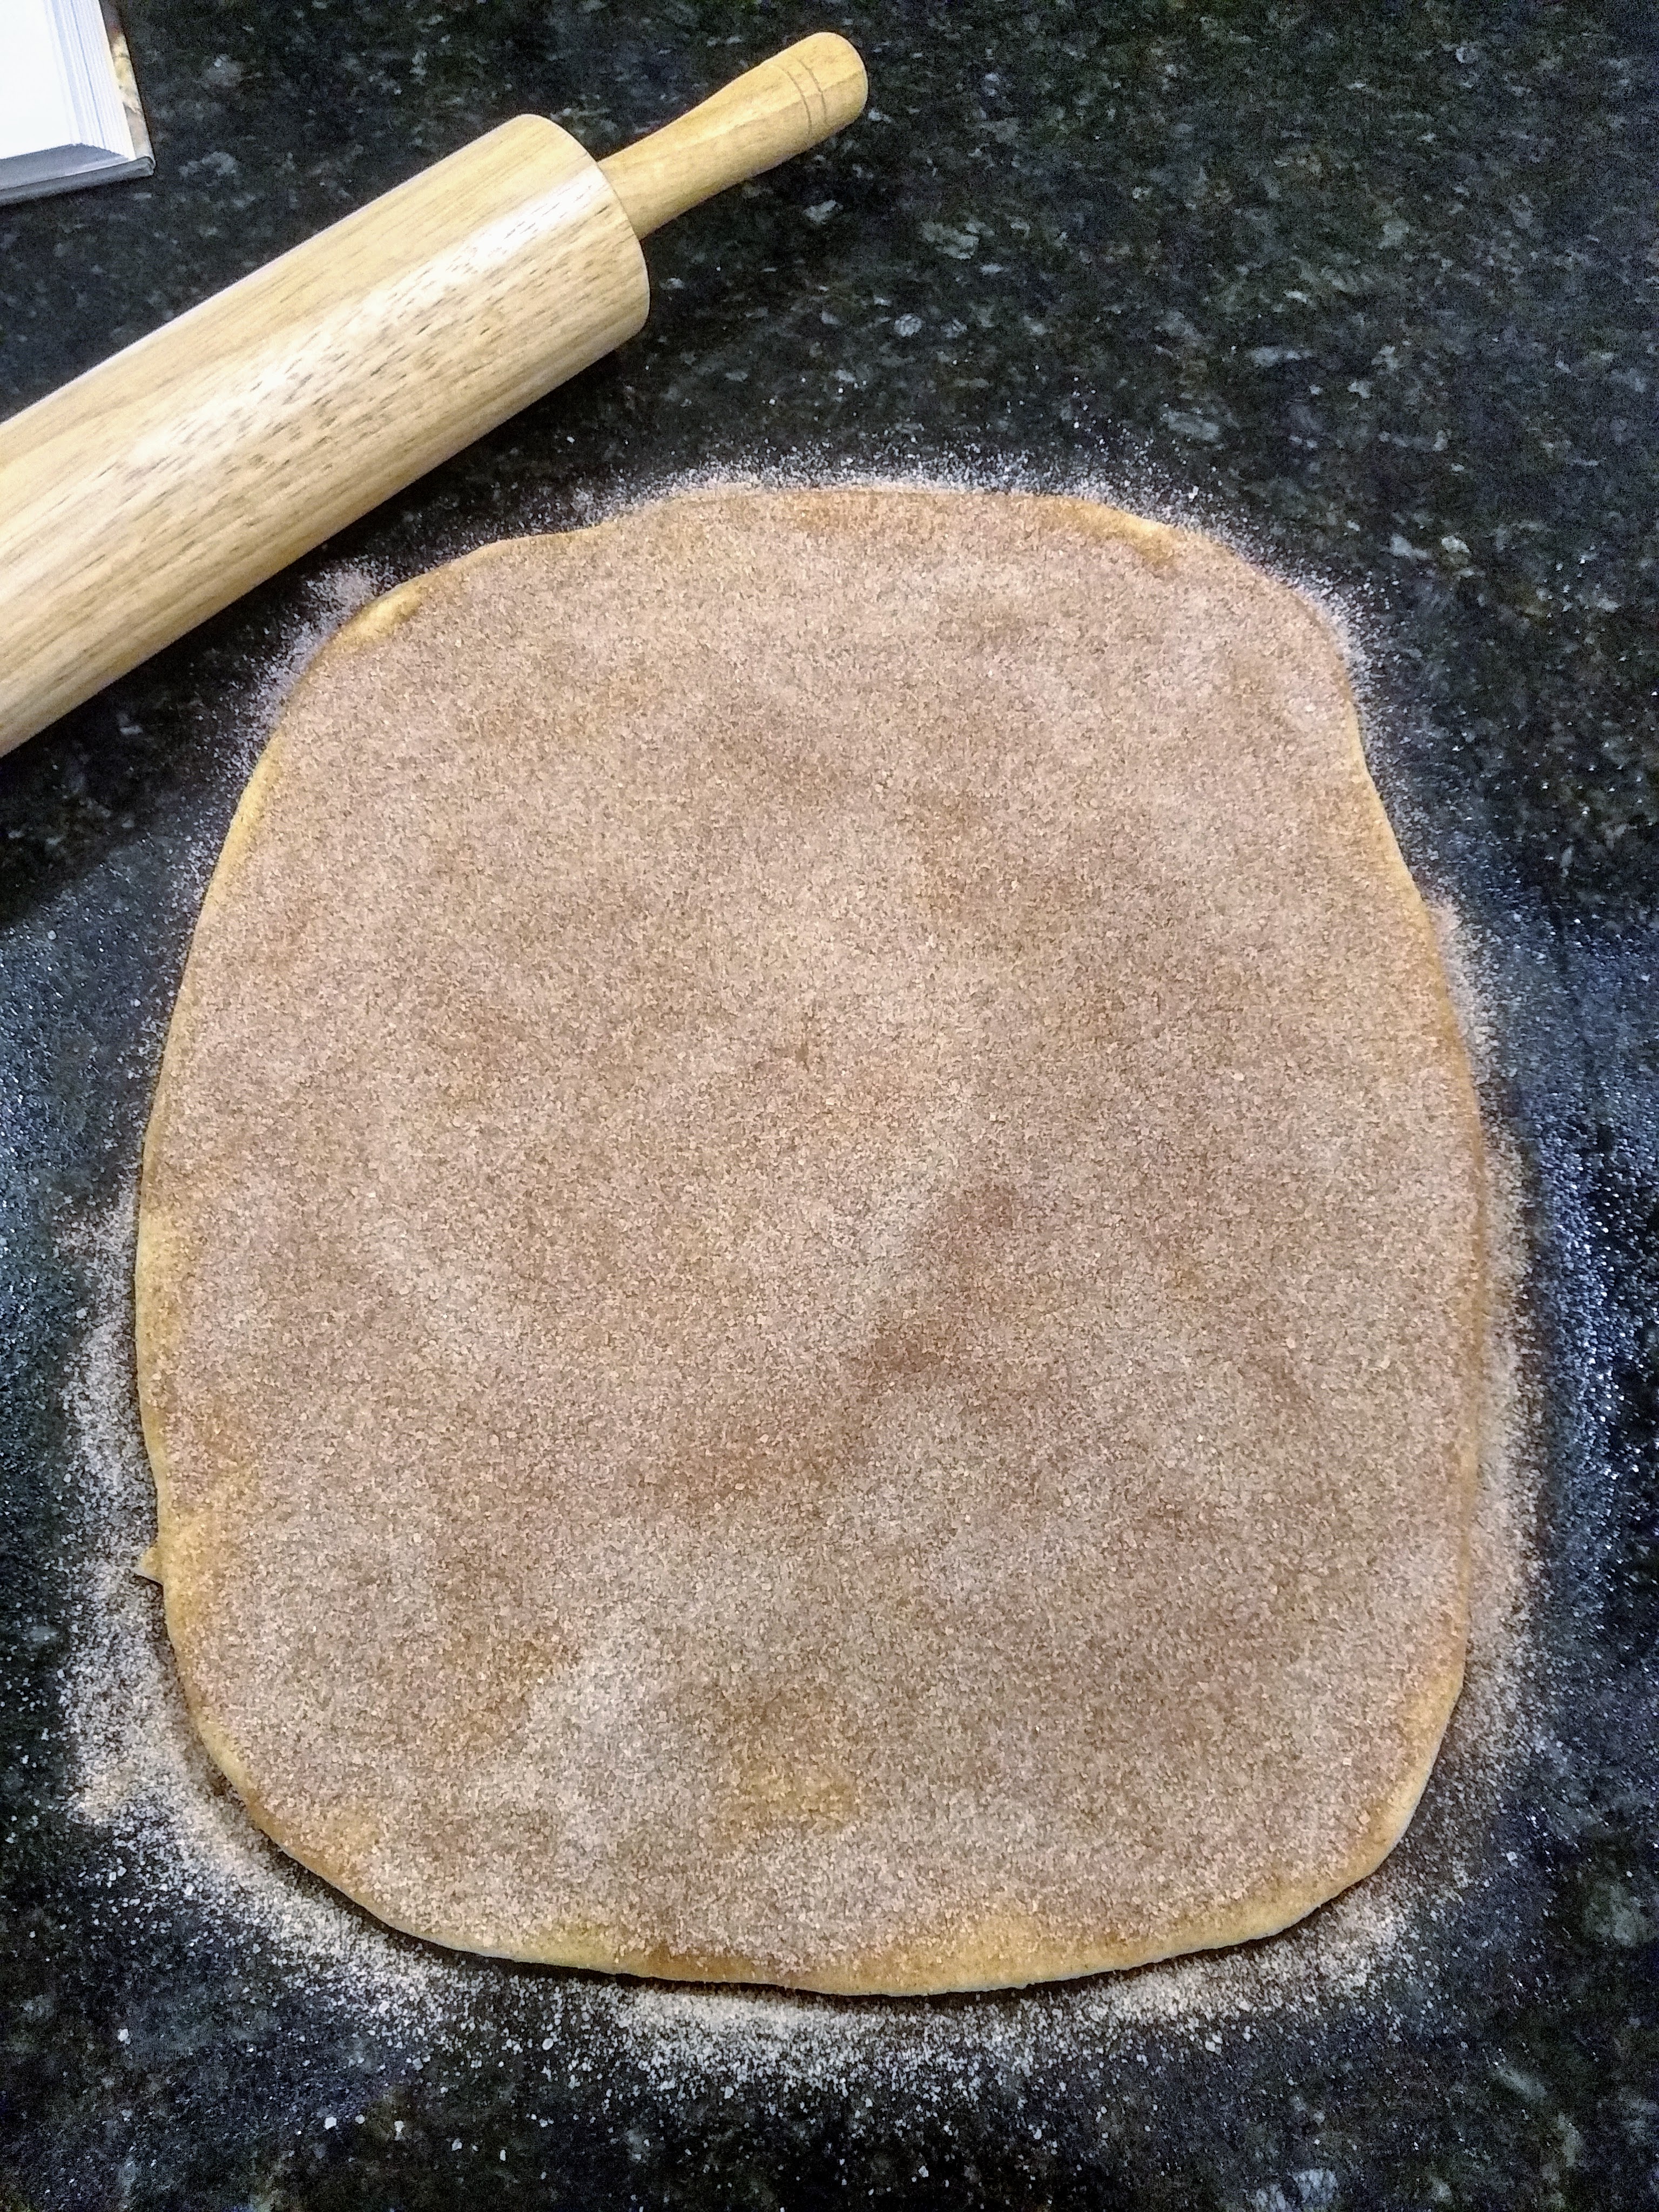 Cinnamon bun dough with cinnamon sugar